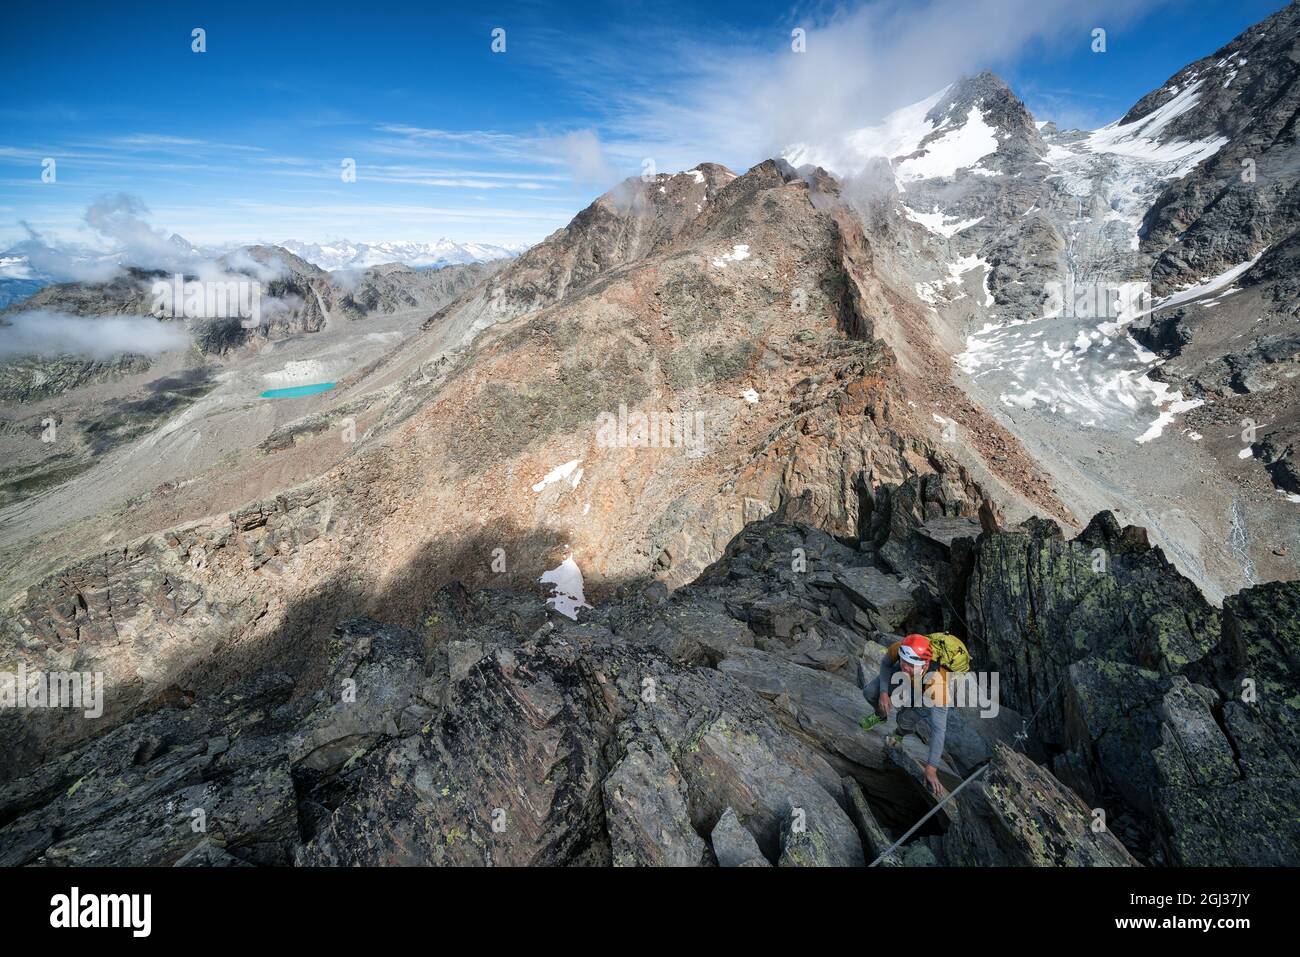 Hiking towards the true summit after rock climbing Jegihorn mountain, Saas-Grund, Switzerland Stock Photo